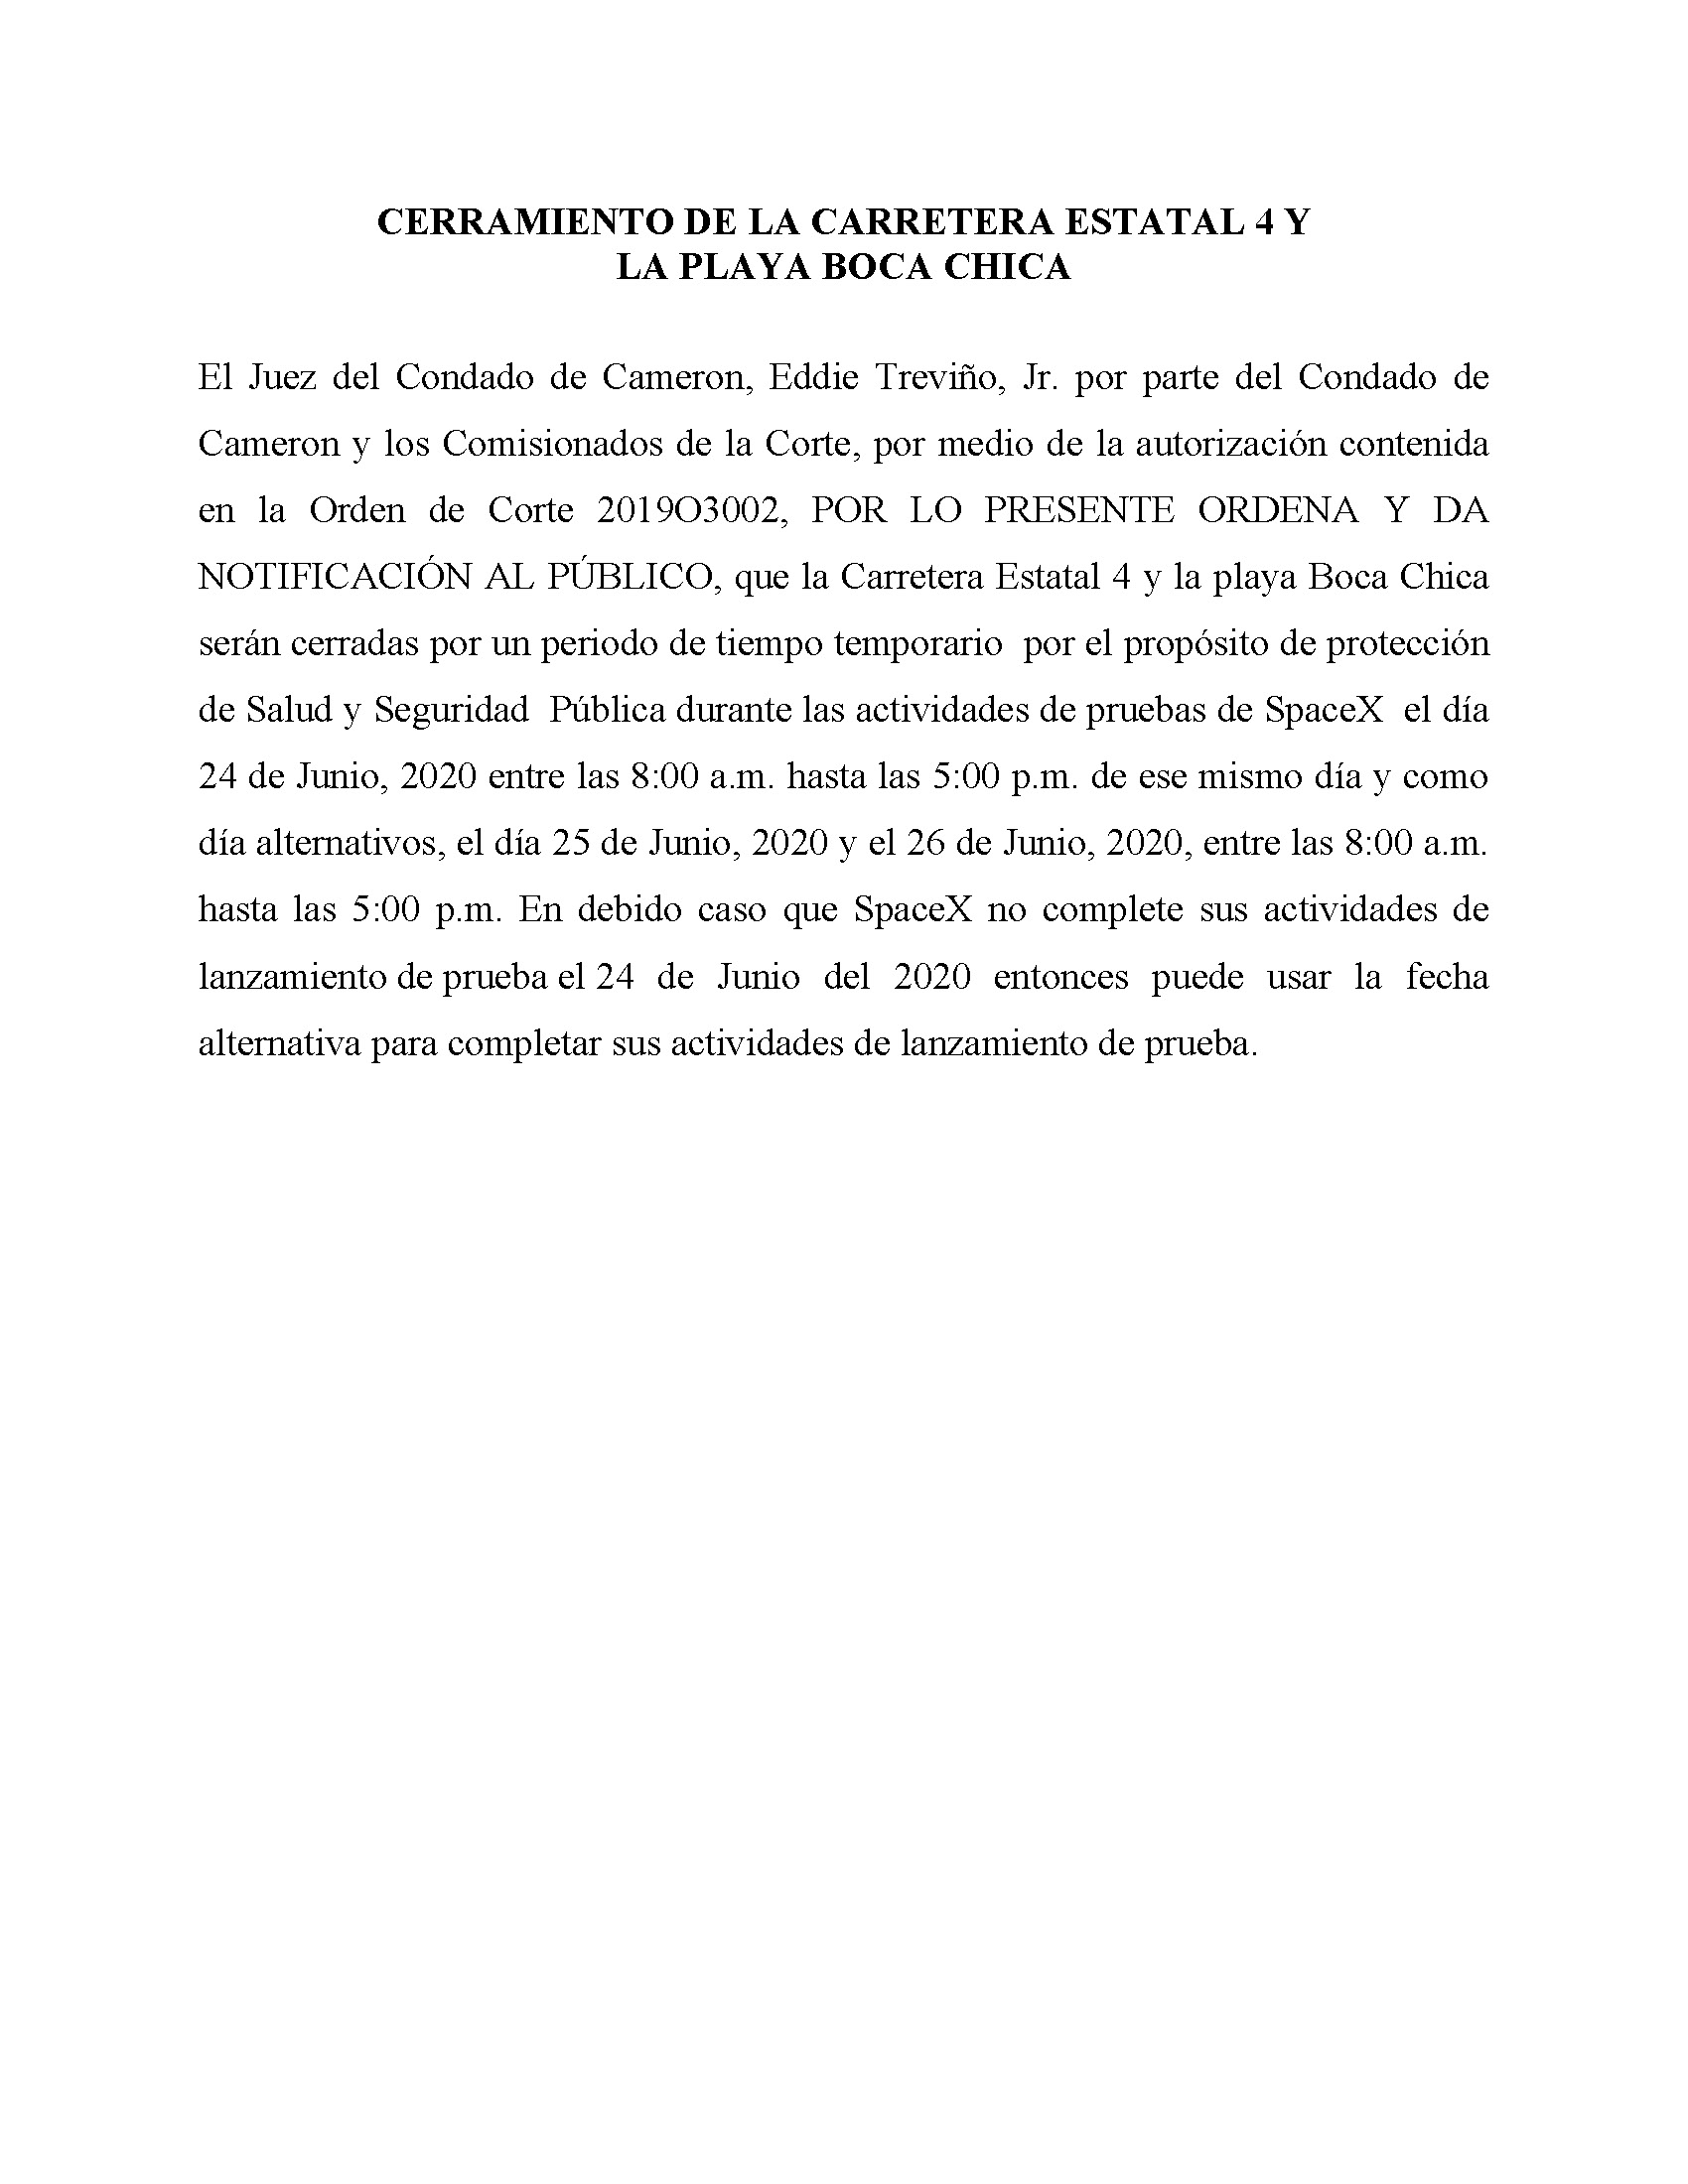 ORDER.CLOSURE OF HIGHWAY 4 Y LA PLAYA BOCA CHICA.SPANISH.06.24.20